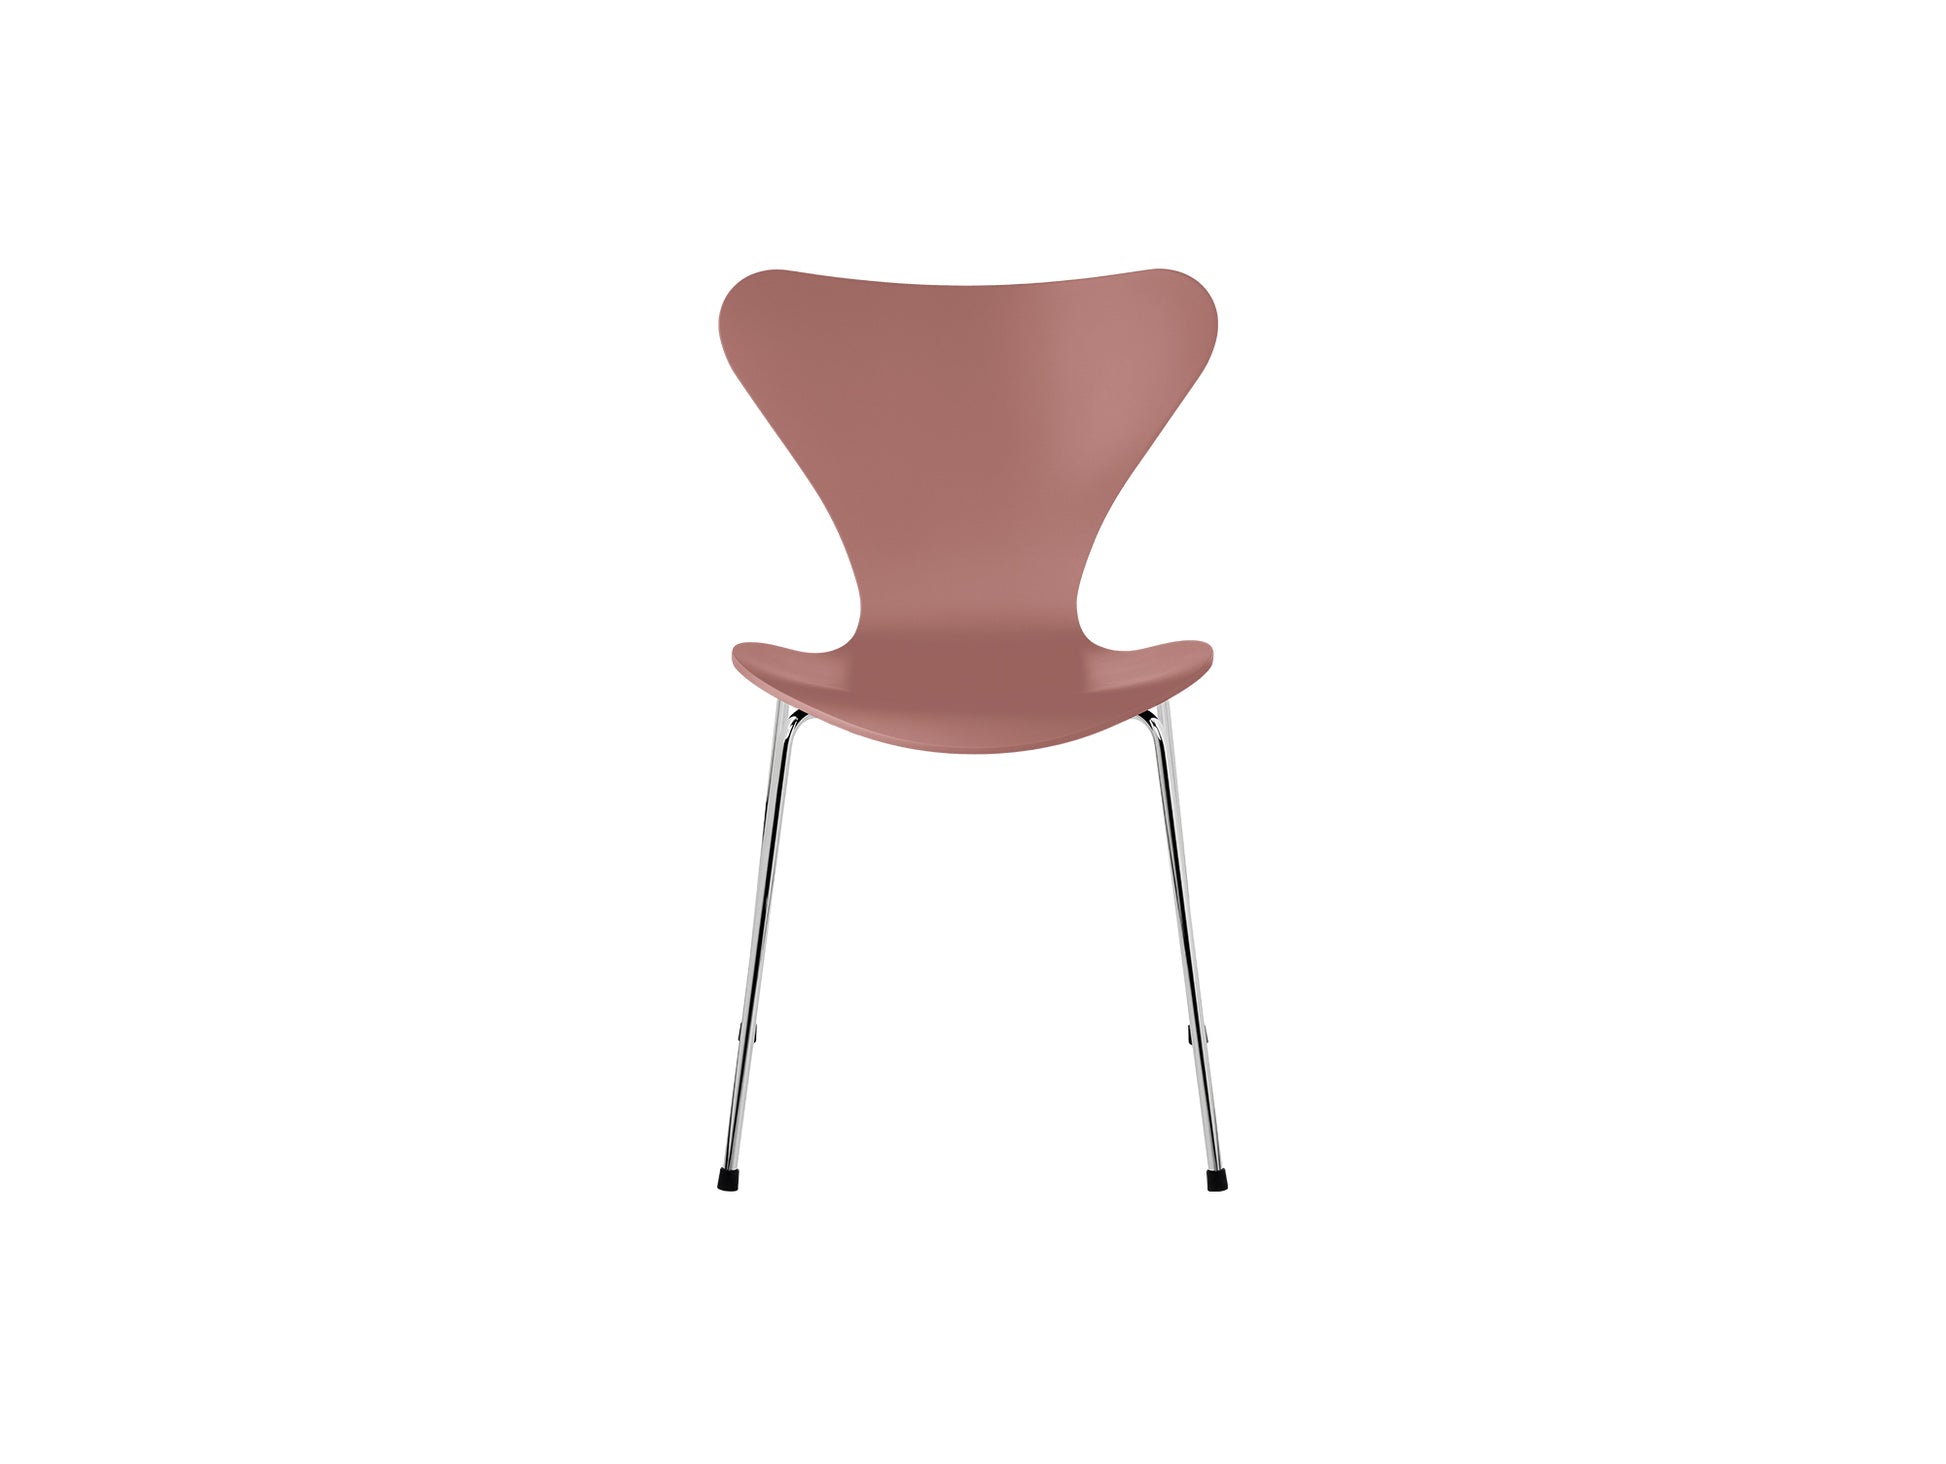 Series 7™ 3107 Dining Chair by Fritz Hansen - Wild Rose Lacquered Veneer Shell / Chromed Steel